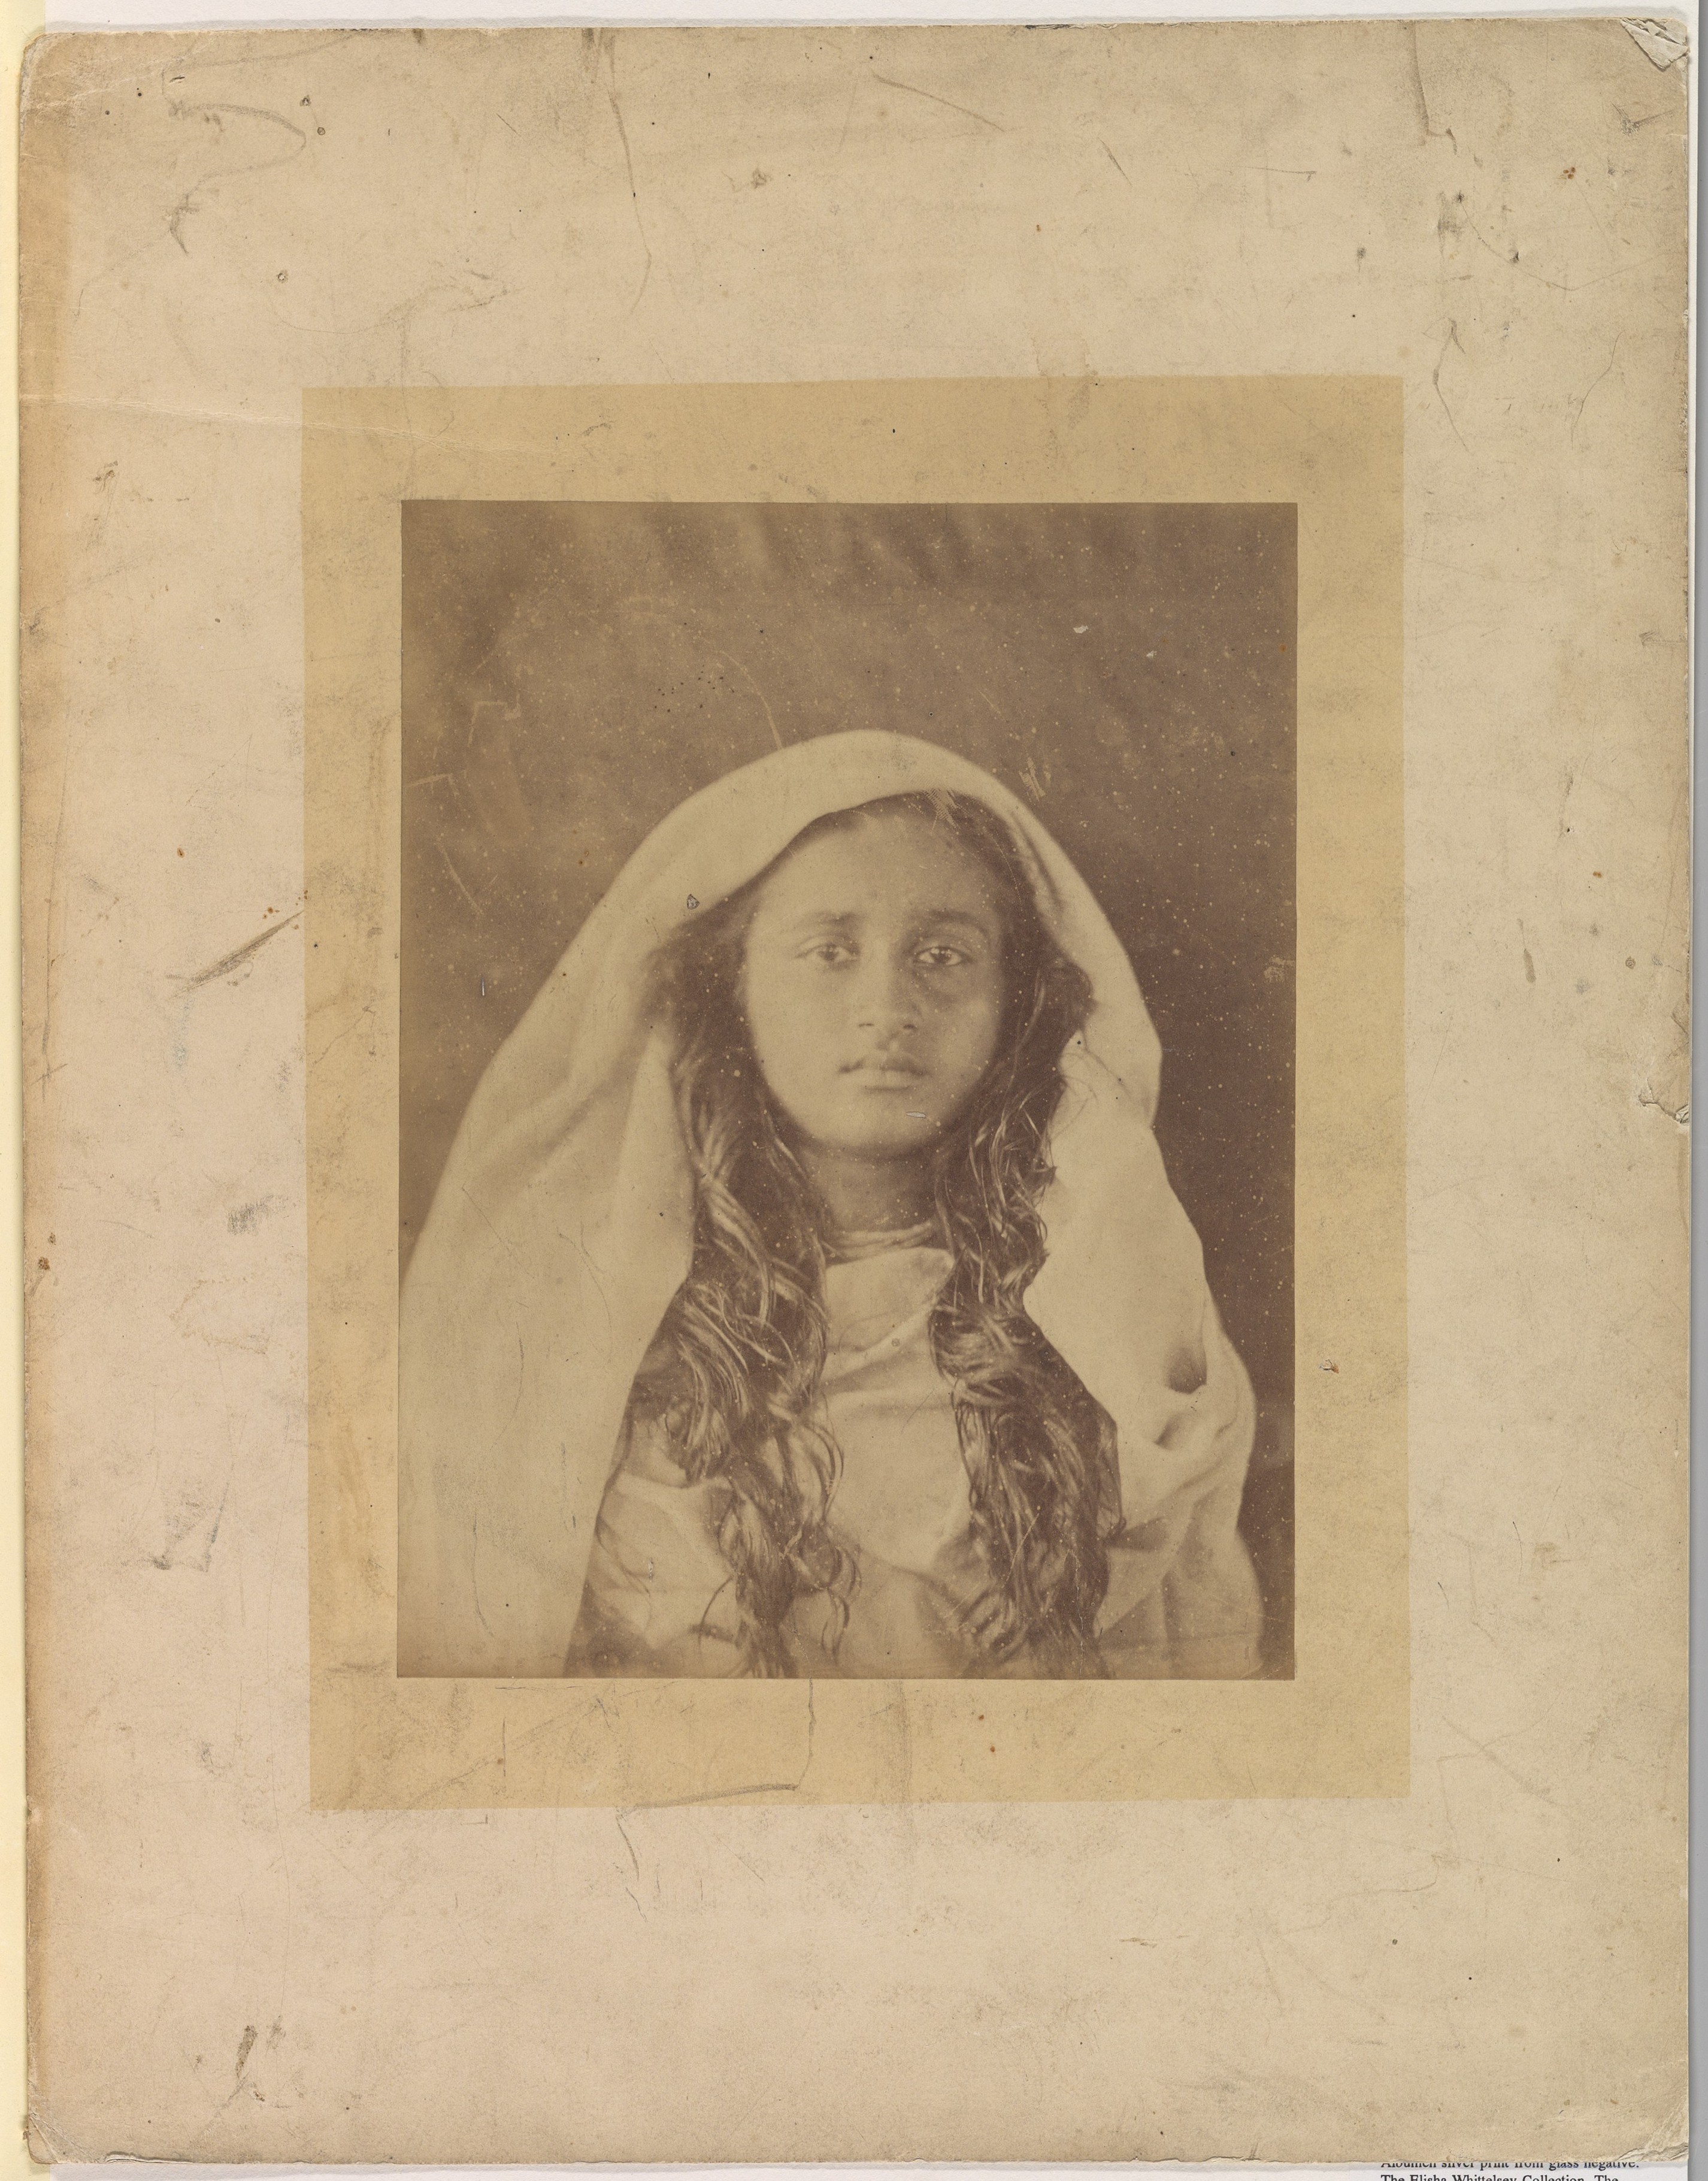 Figure 4: Julia Margaret Cameron, Ceylonese Woman, 1875-1879. The Metropolitan Museum of Art (69.607.3).